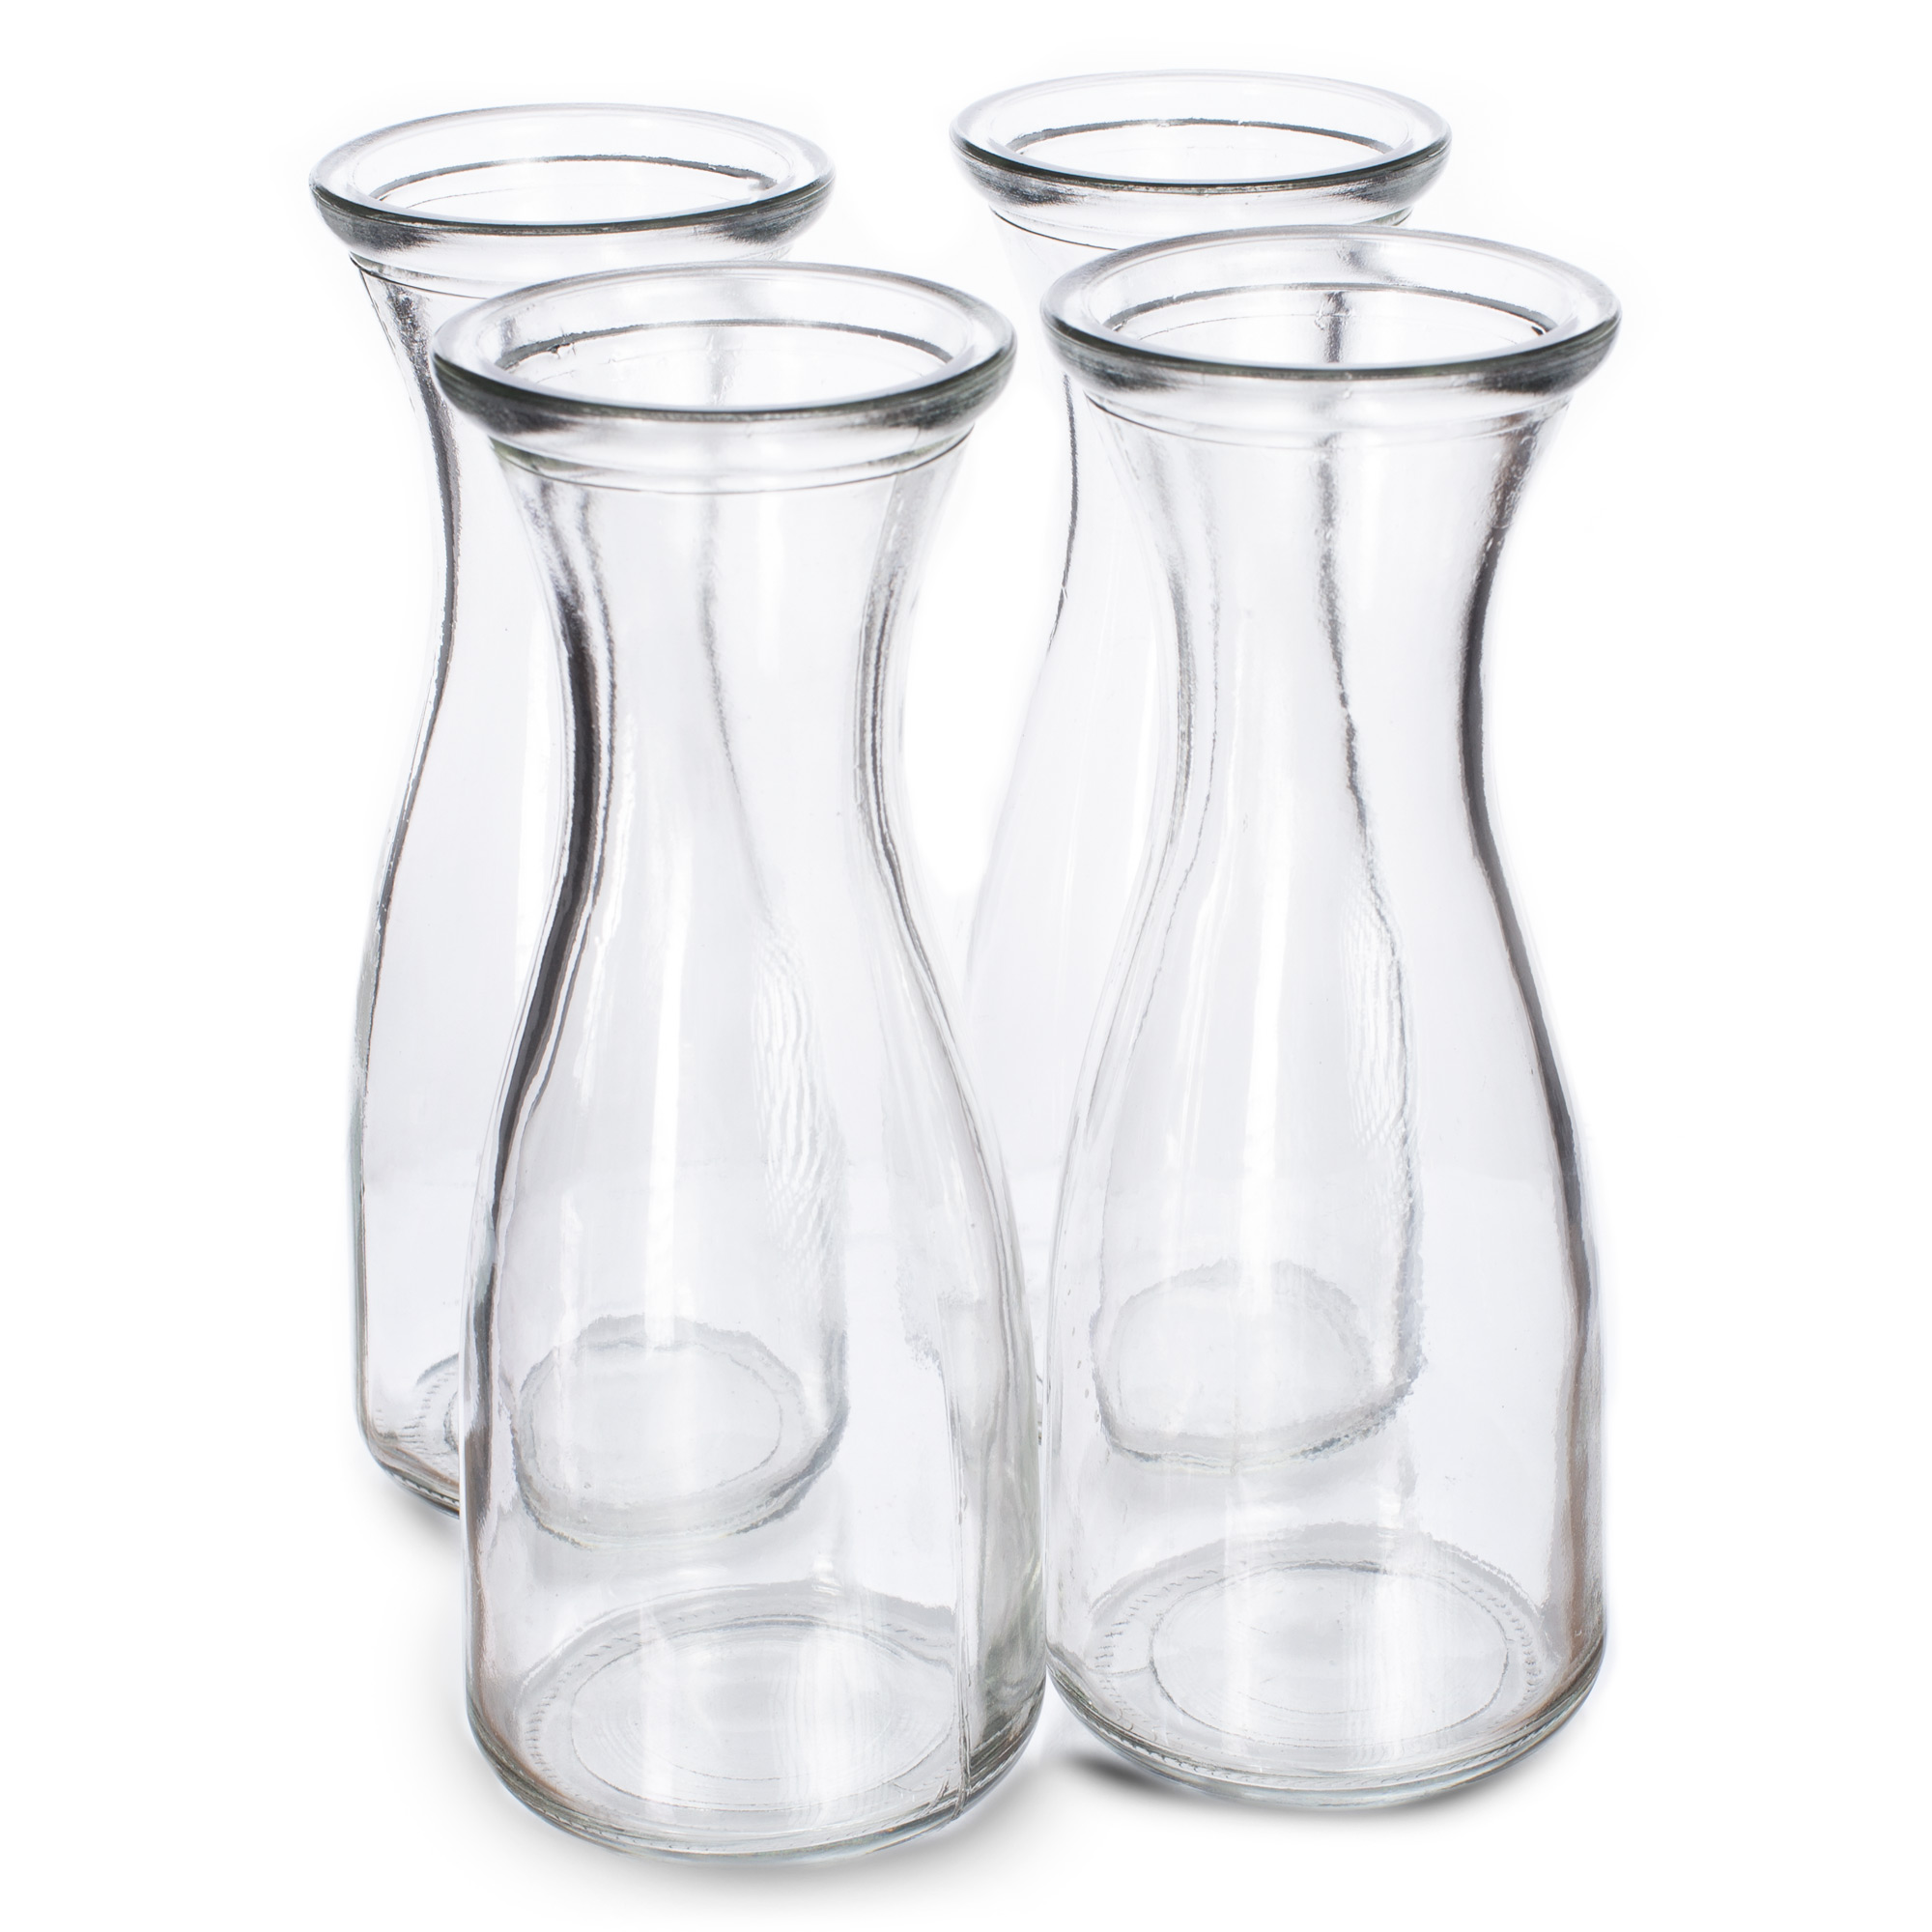 17 oz. (500mL) Glass Beverage Carafe, 4-pack